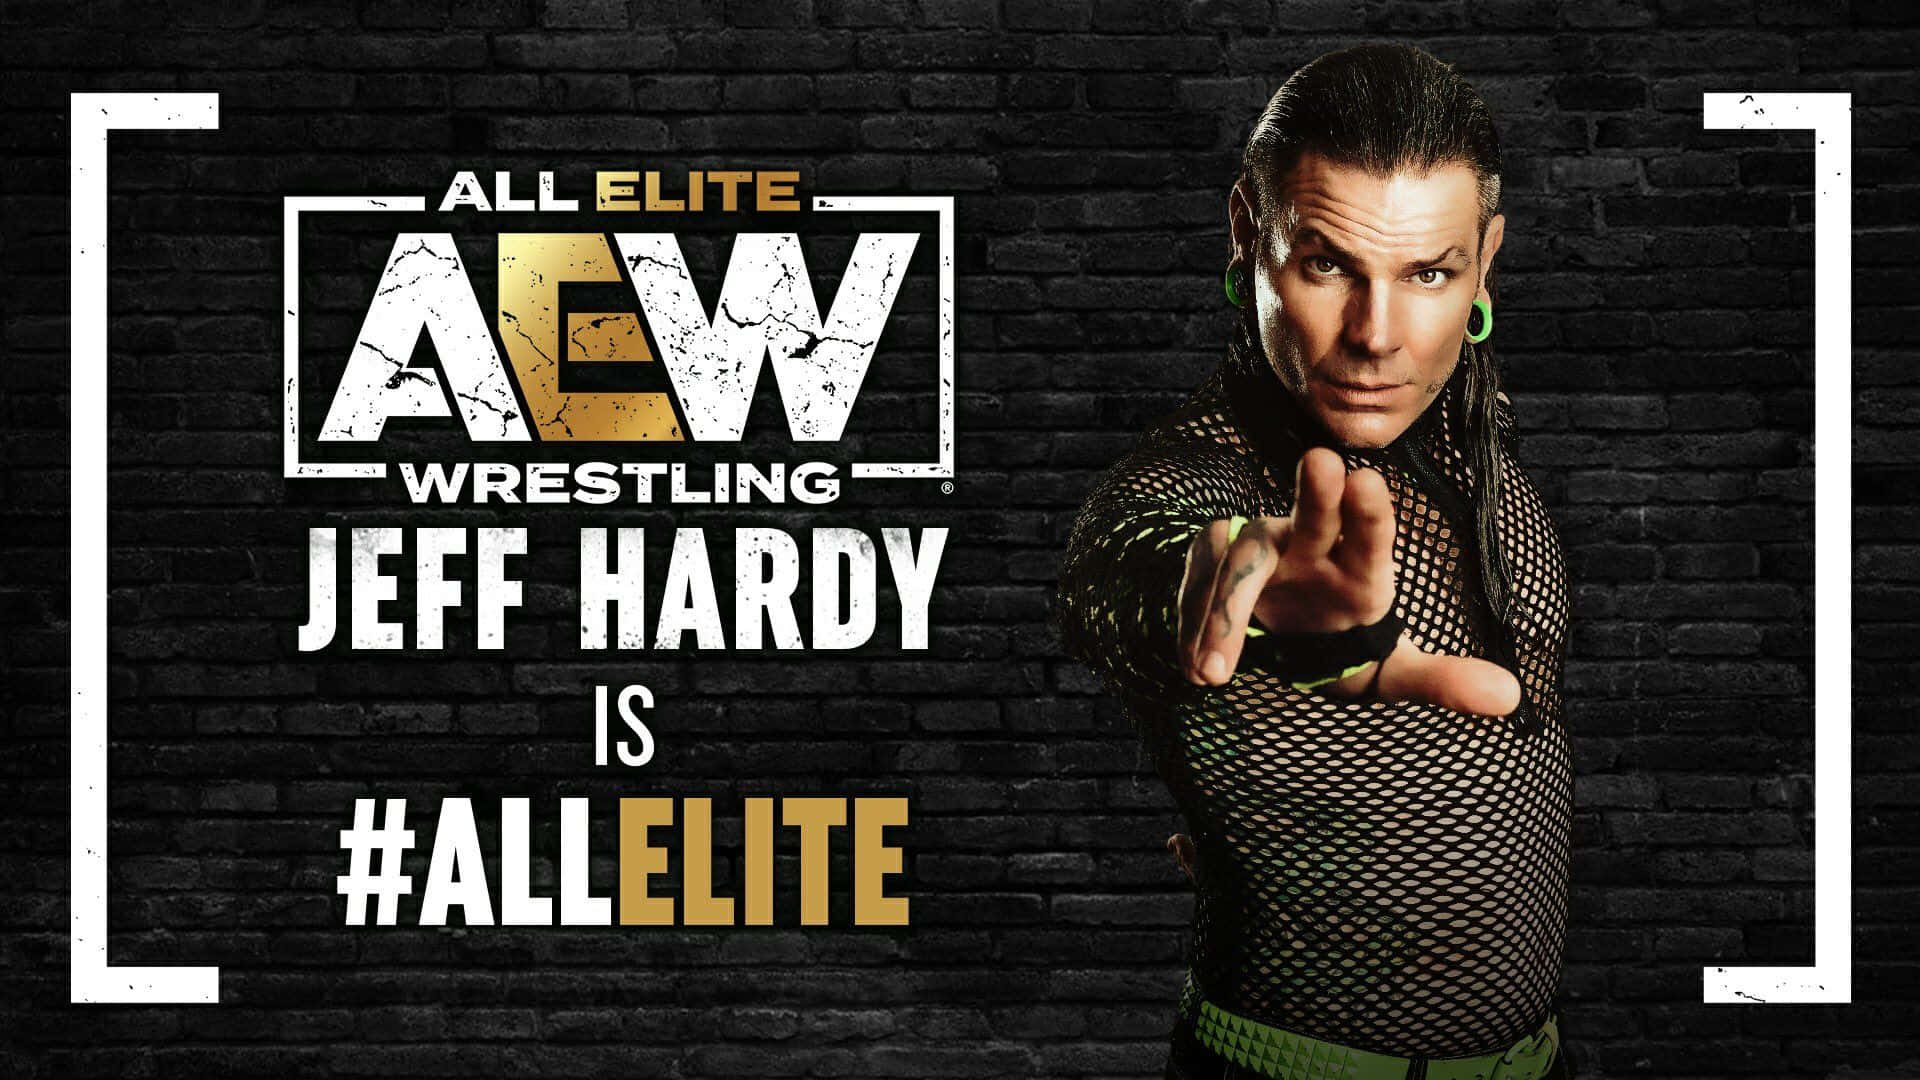 Jeff Hardy For All Elite Wrestling